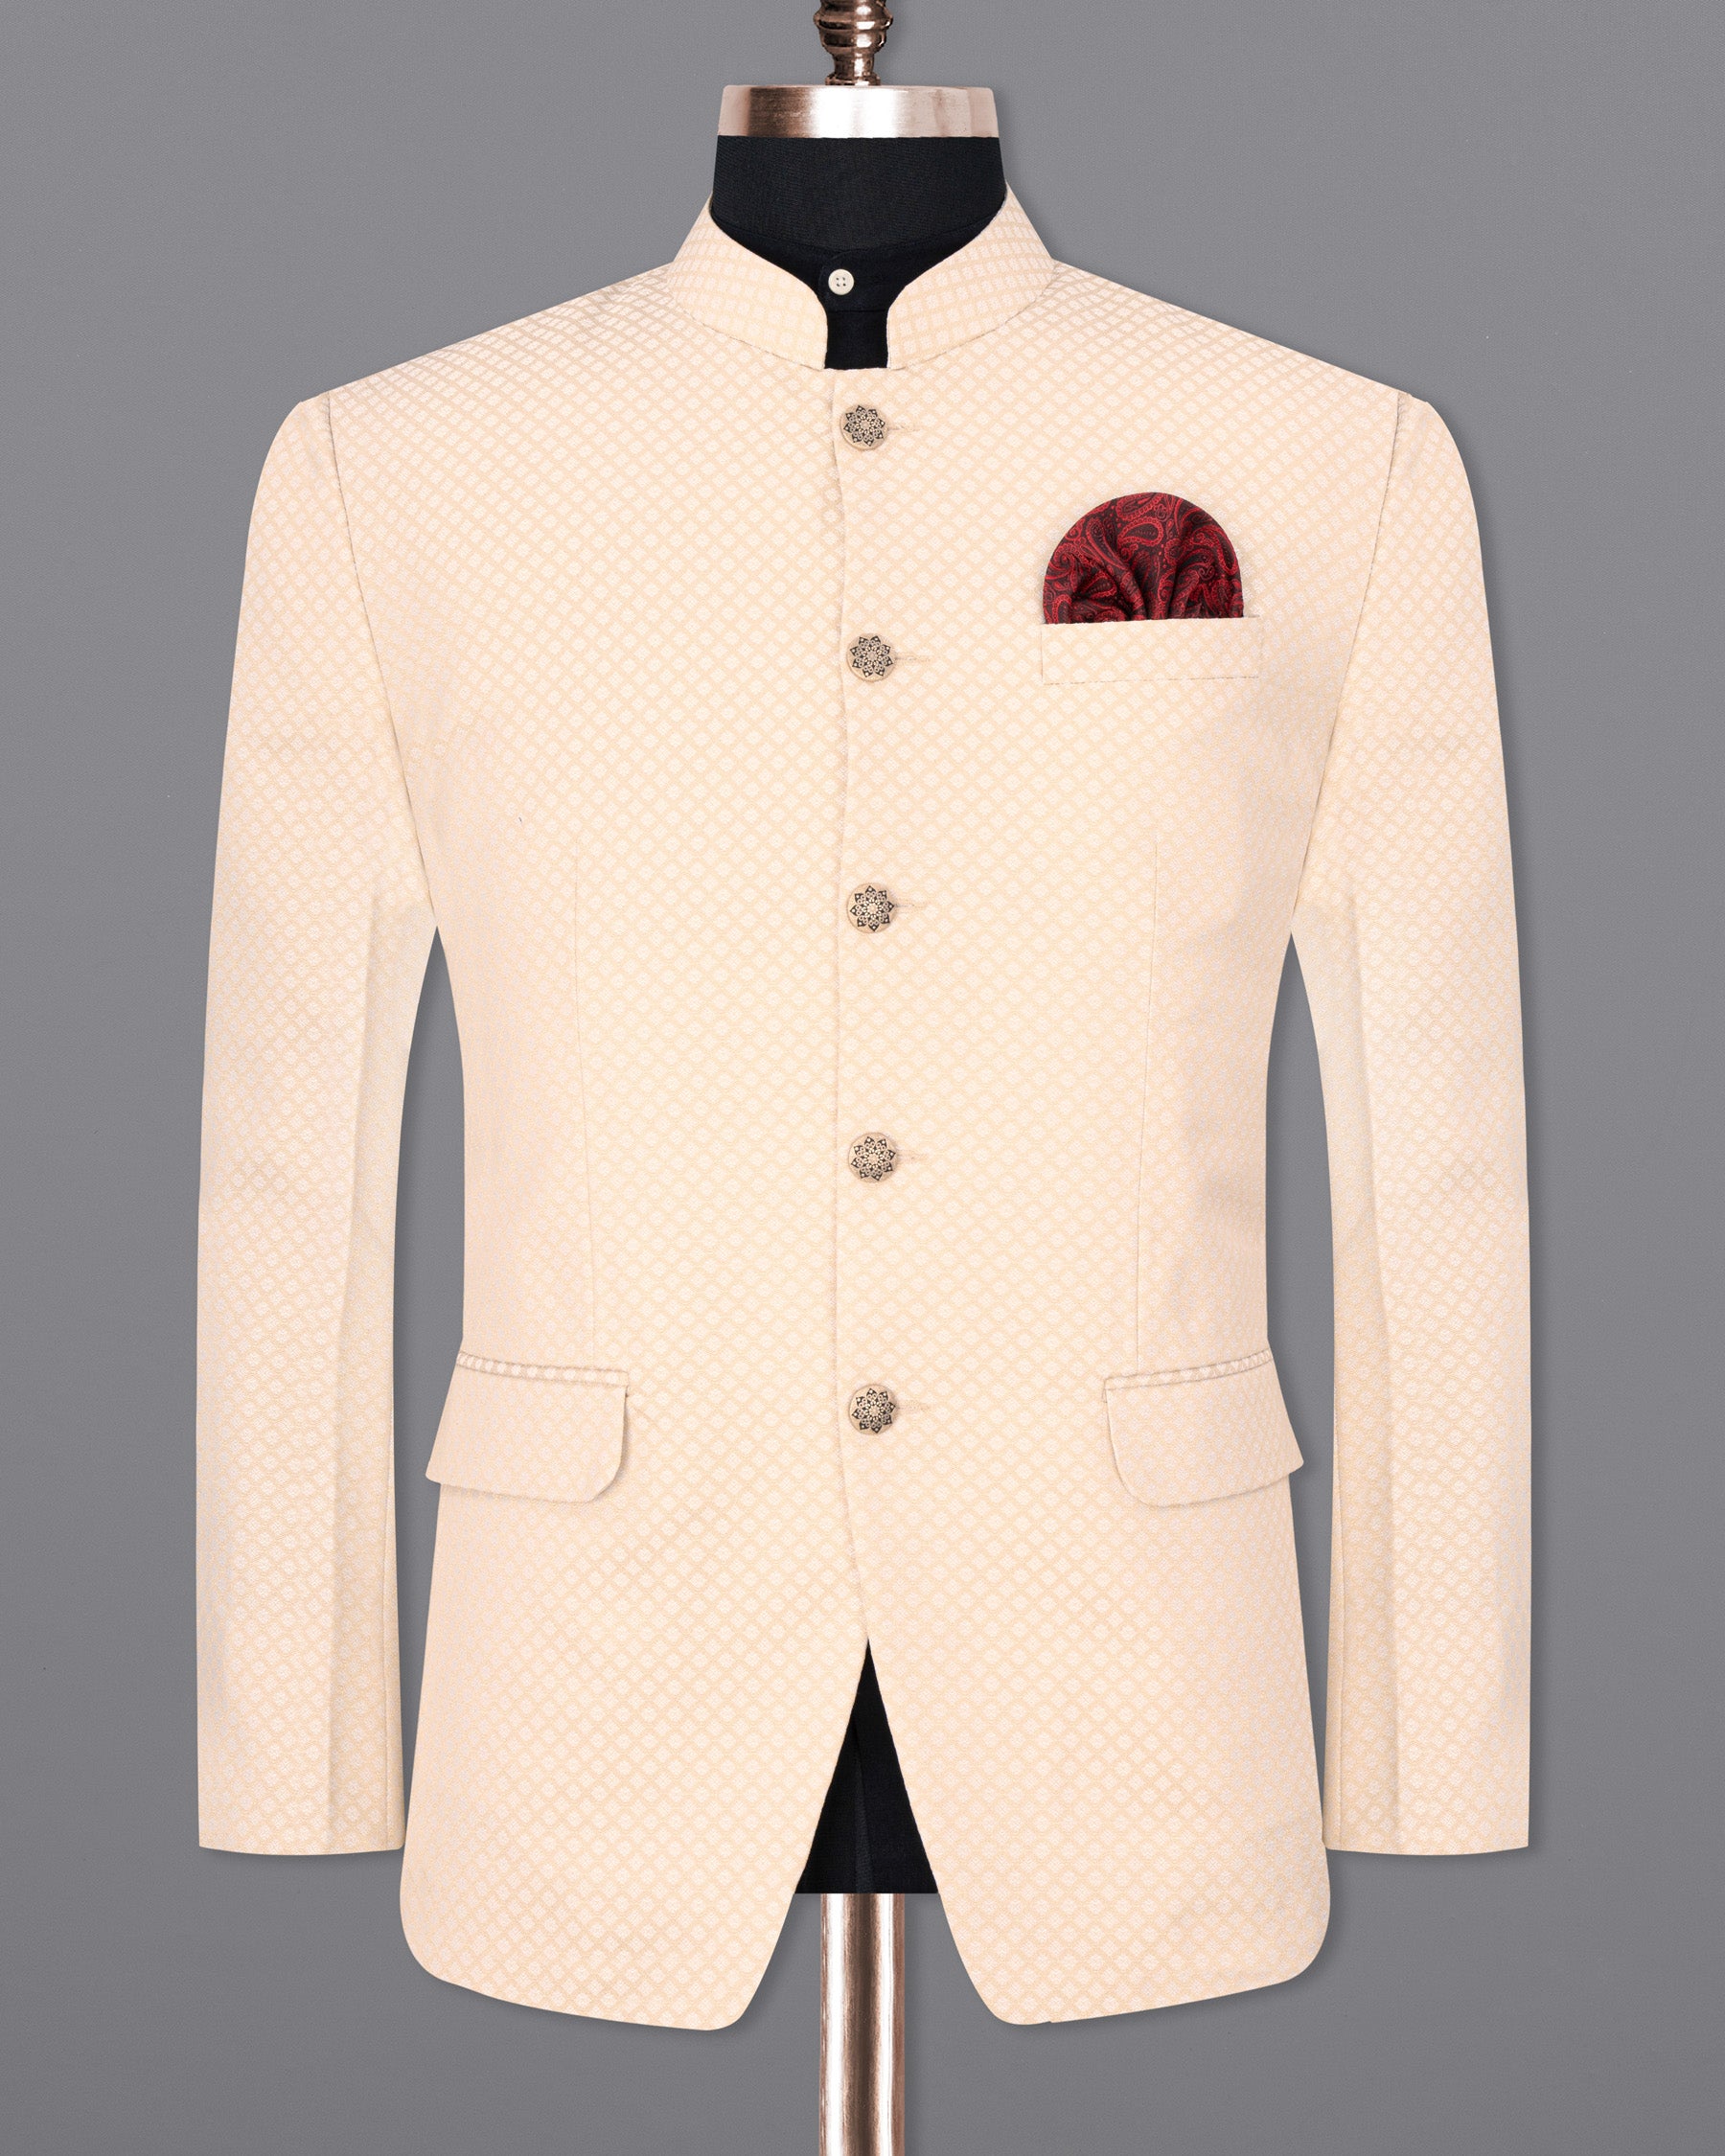 Apricot Peach Textured Bandhgala Designer Suit